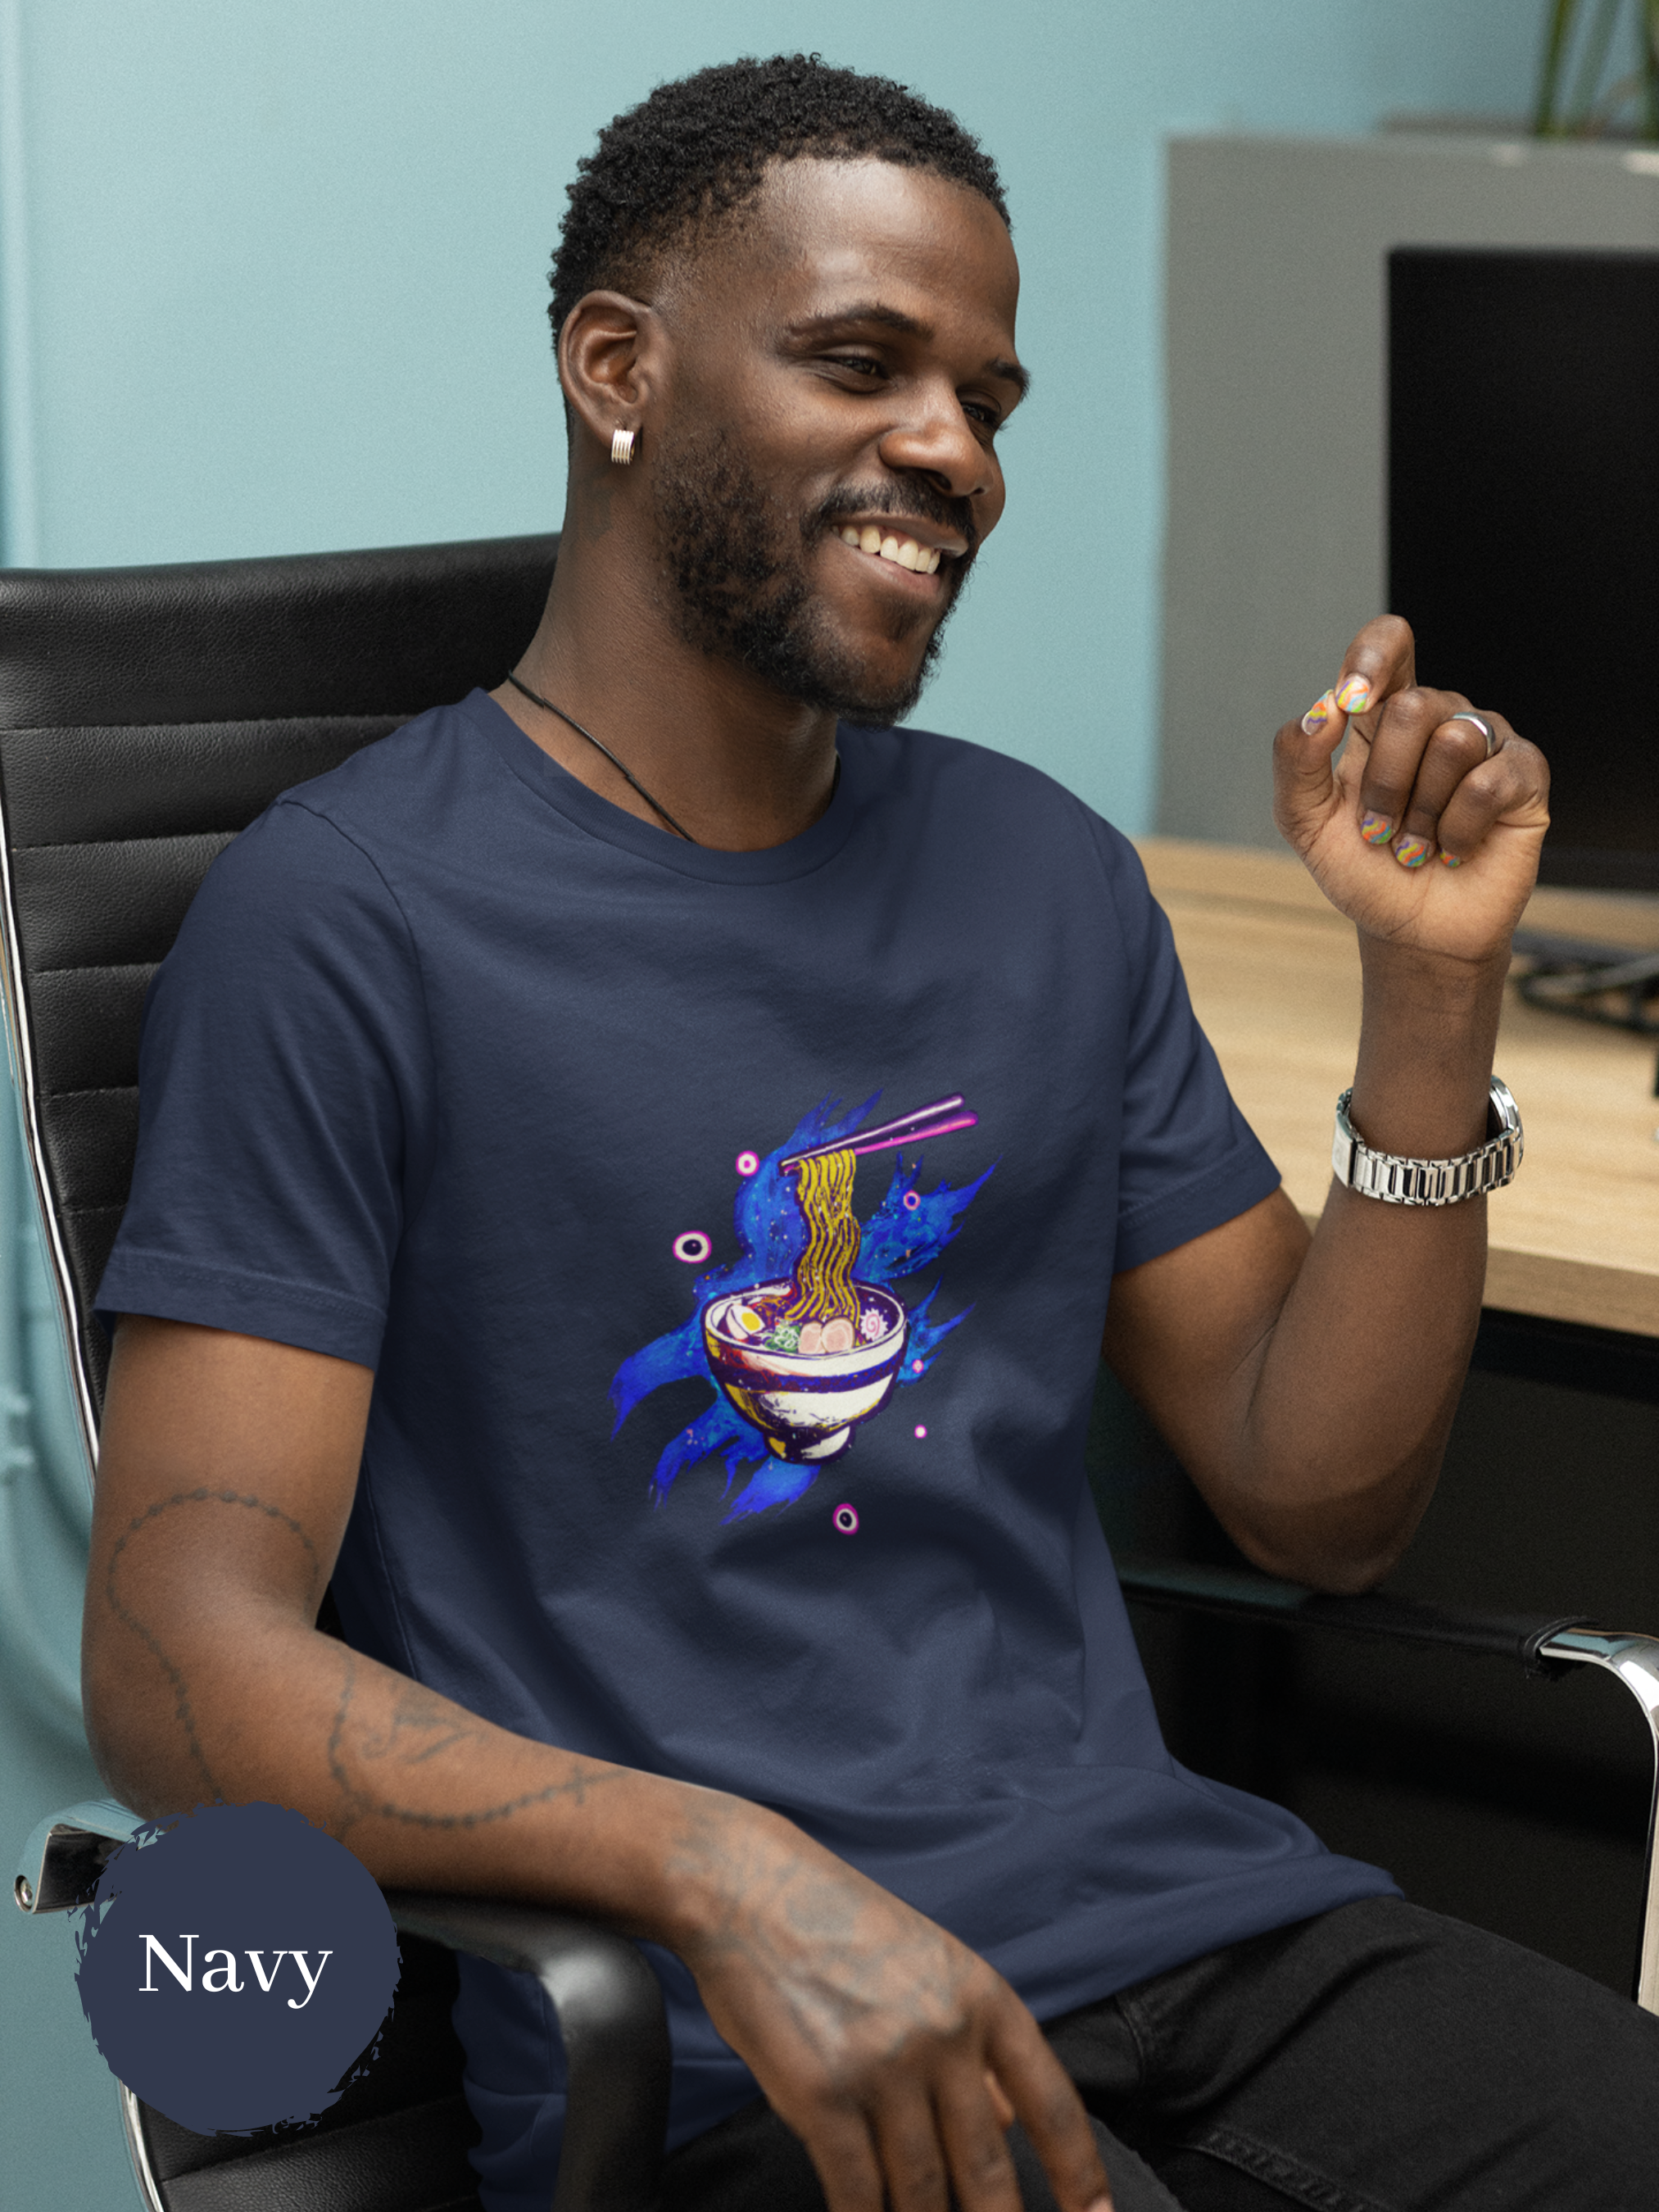 Ramen Bowl Galaxy T-Shirt: Japanese Foodie Shirt with Ramen Art